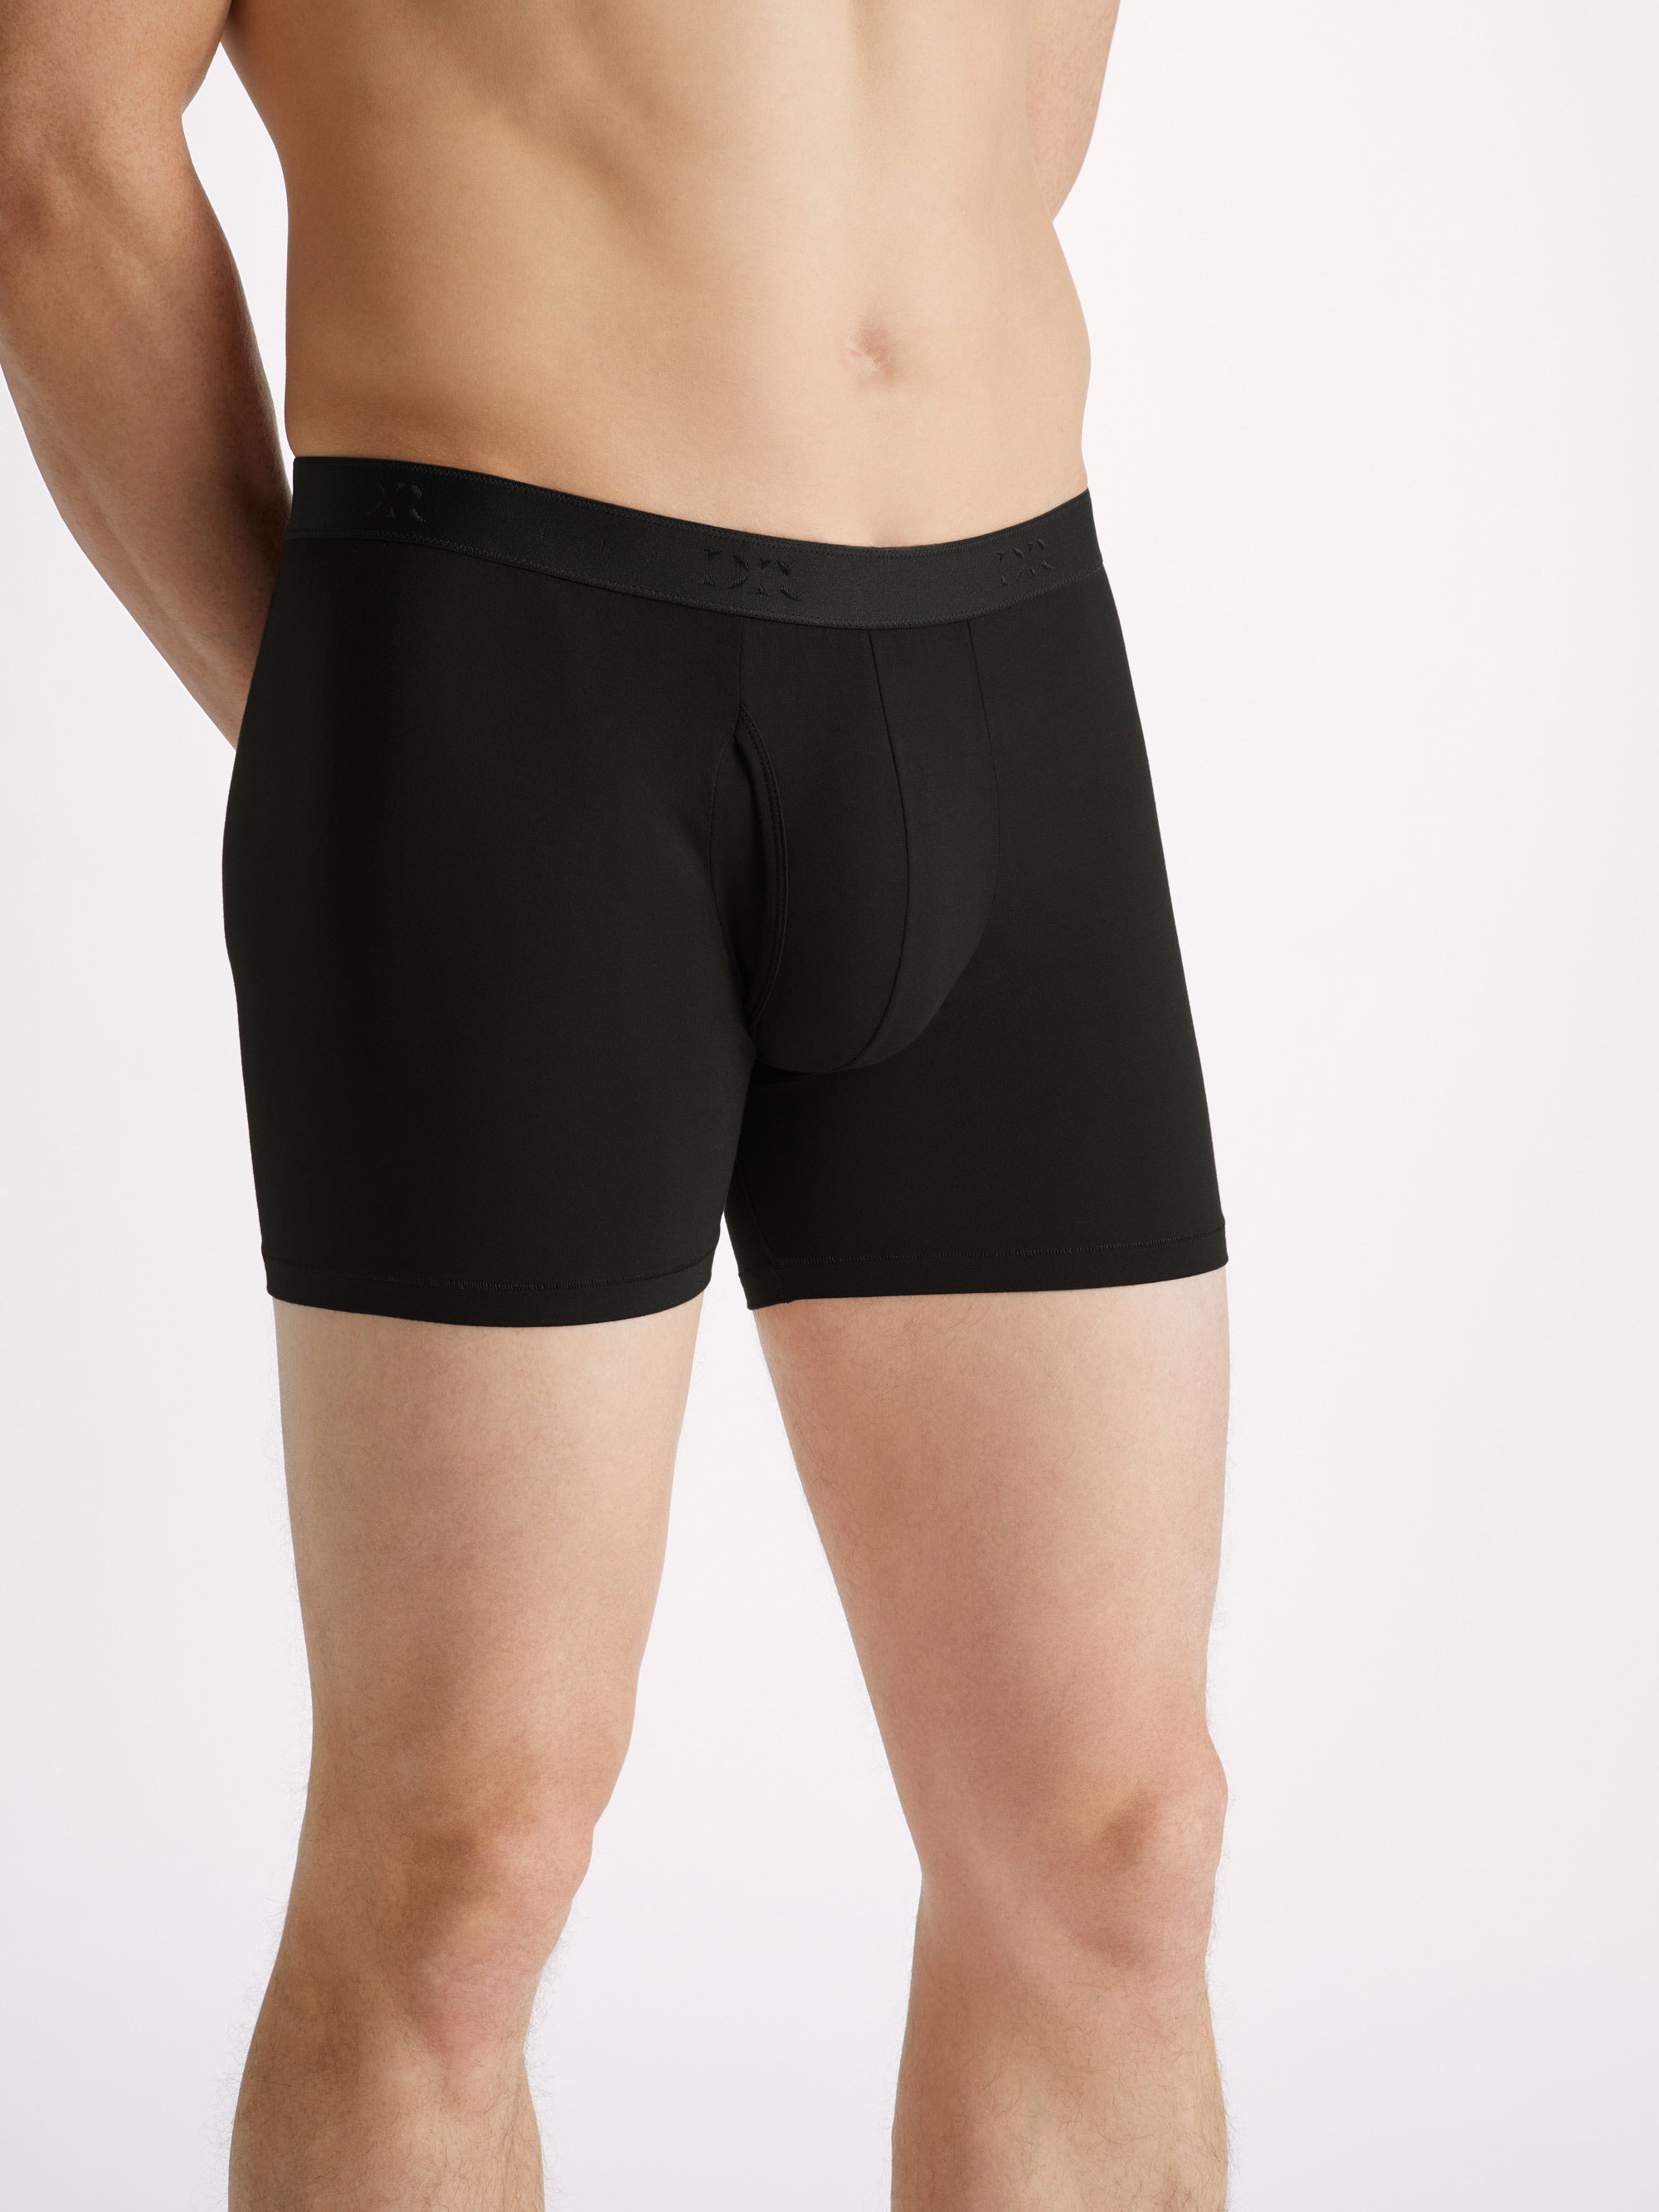 Trunk Underwear 5 Pieces Micro Modal Inner Wear, Length: Mid Way